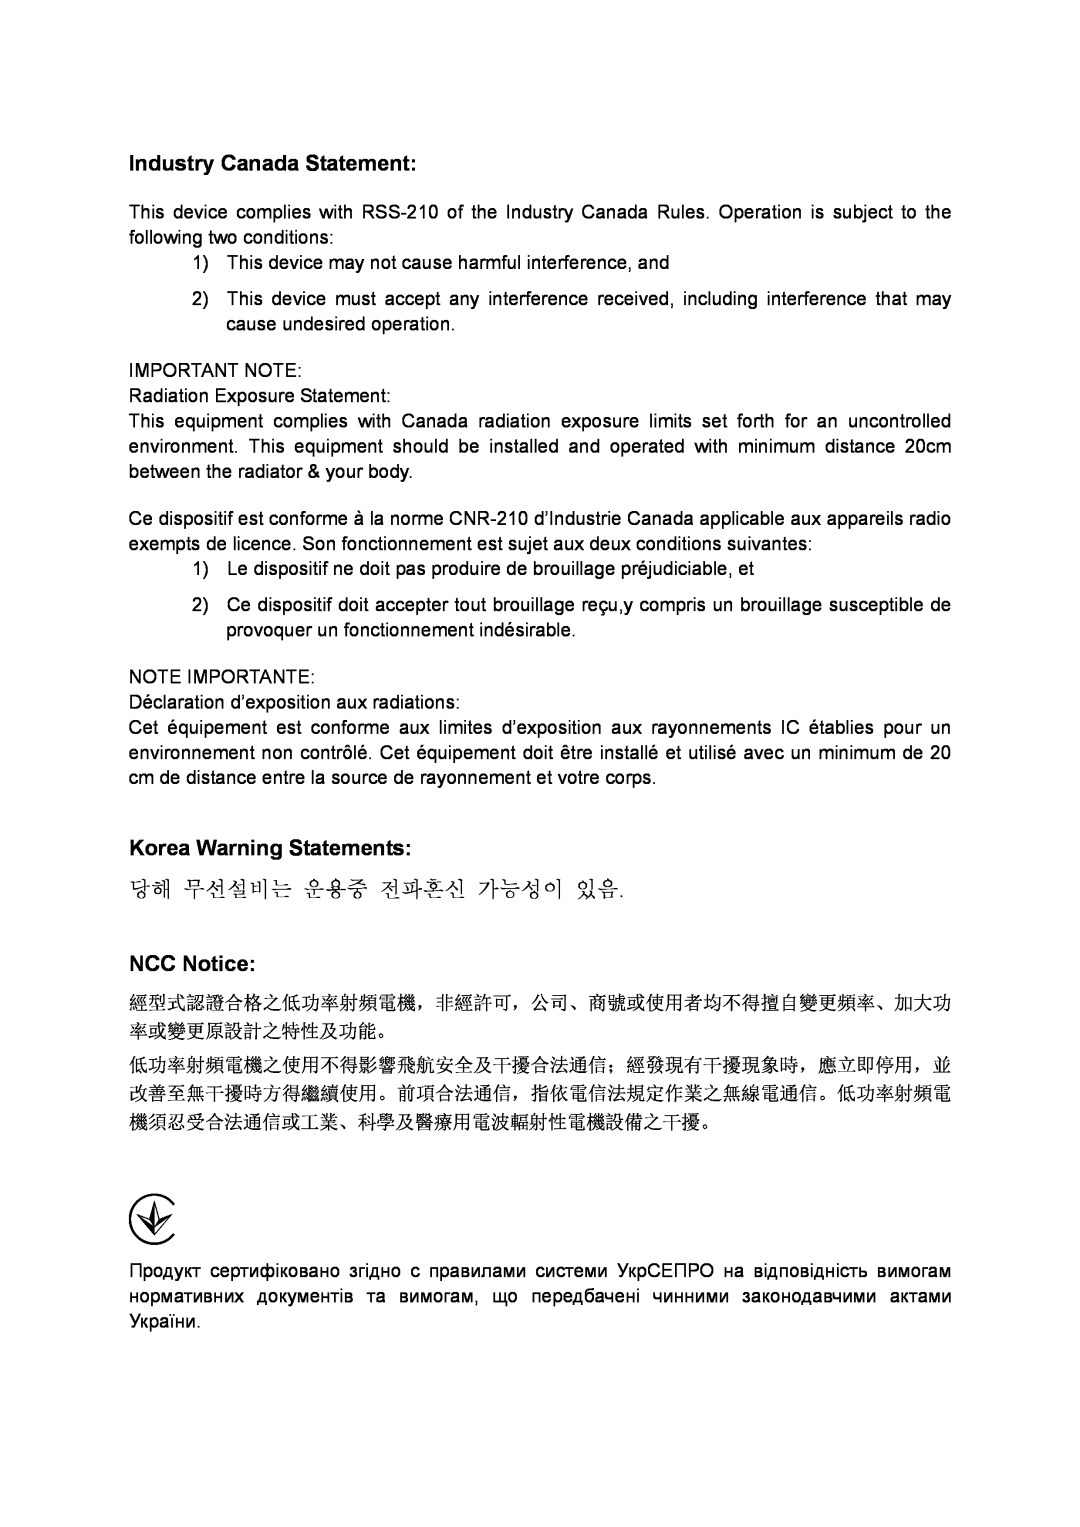 TP-Link TL-SC2020N manual Industry Canada Statement, Korea Warning Statements, NCC Notice, 당해 무선설비는 운용중 전파혼신 가능성이 있음 